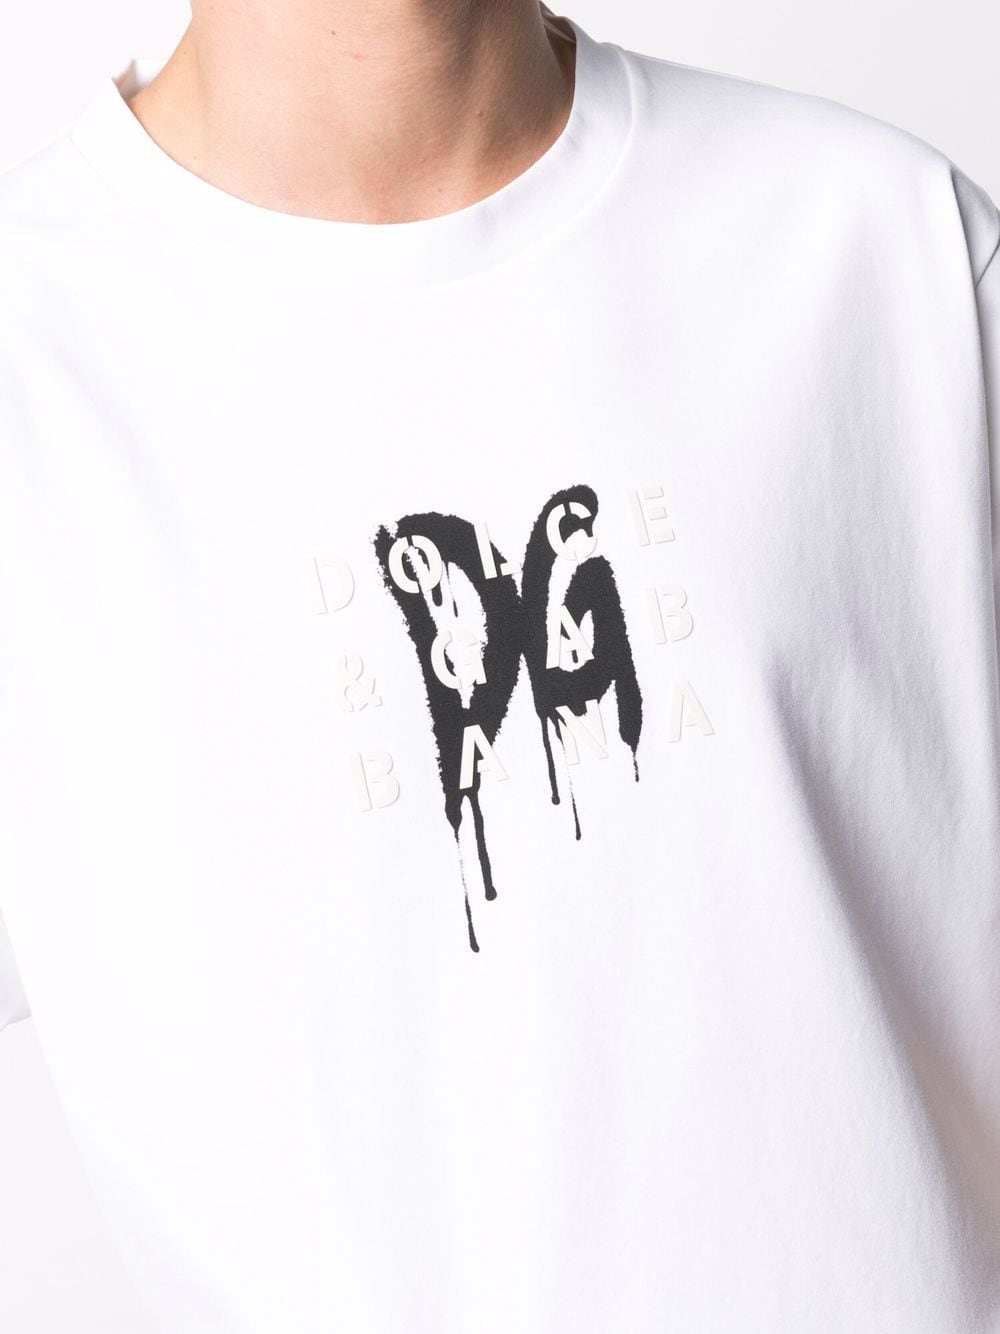 Dolce Gabbana Stencil T-Shirt G8MS1ZFUGK4